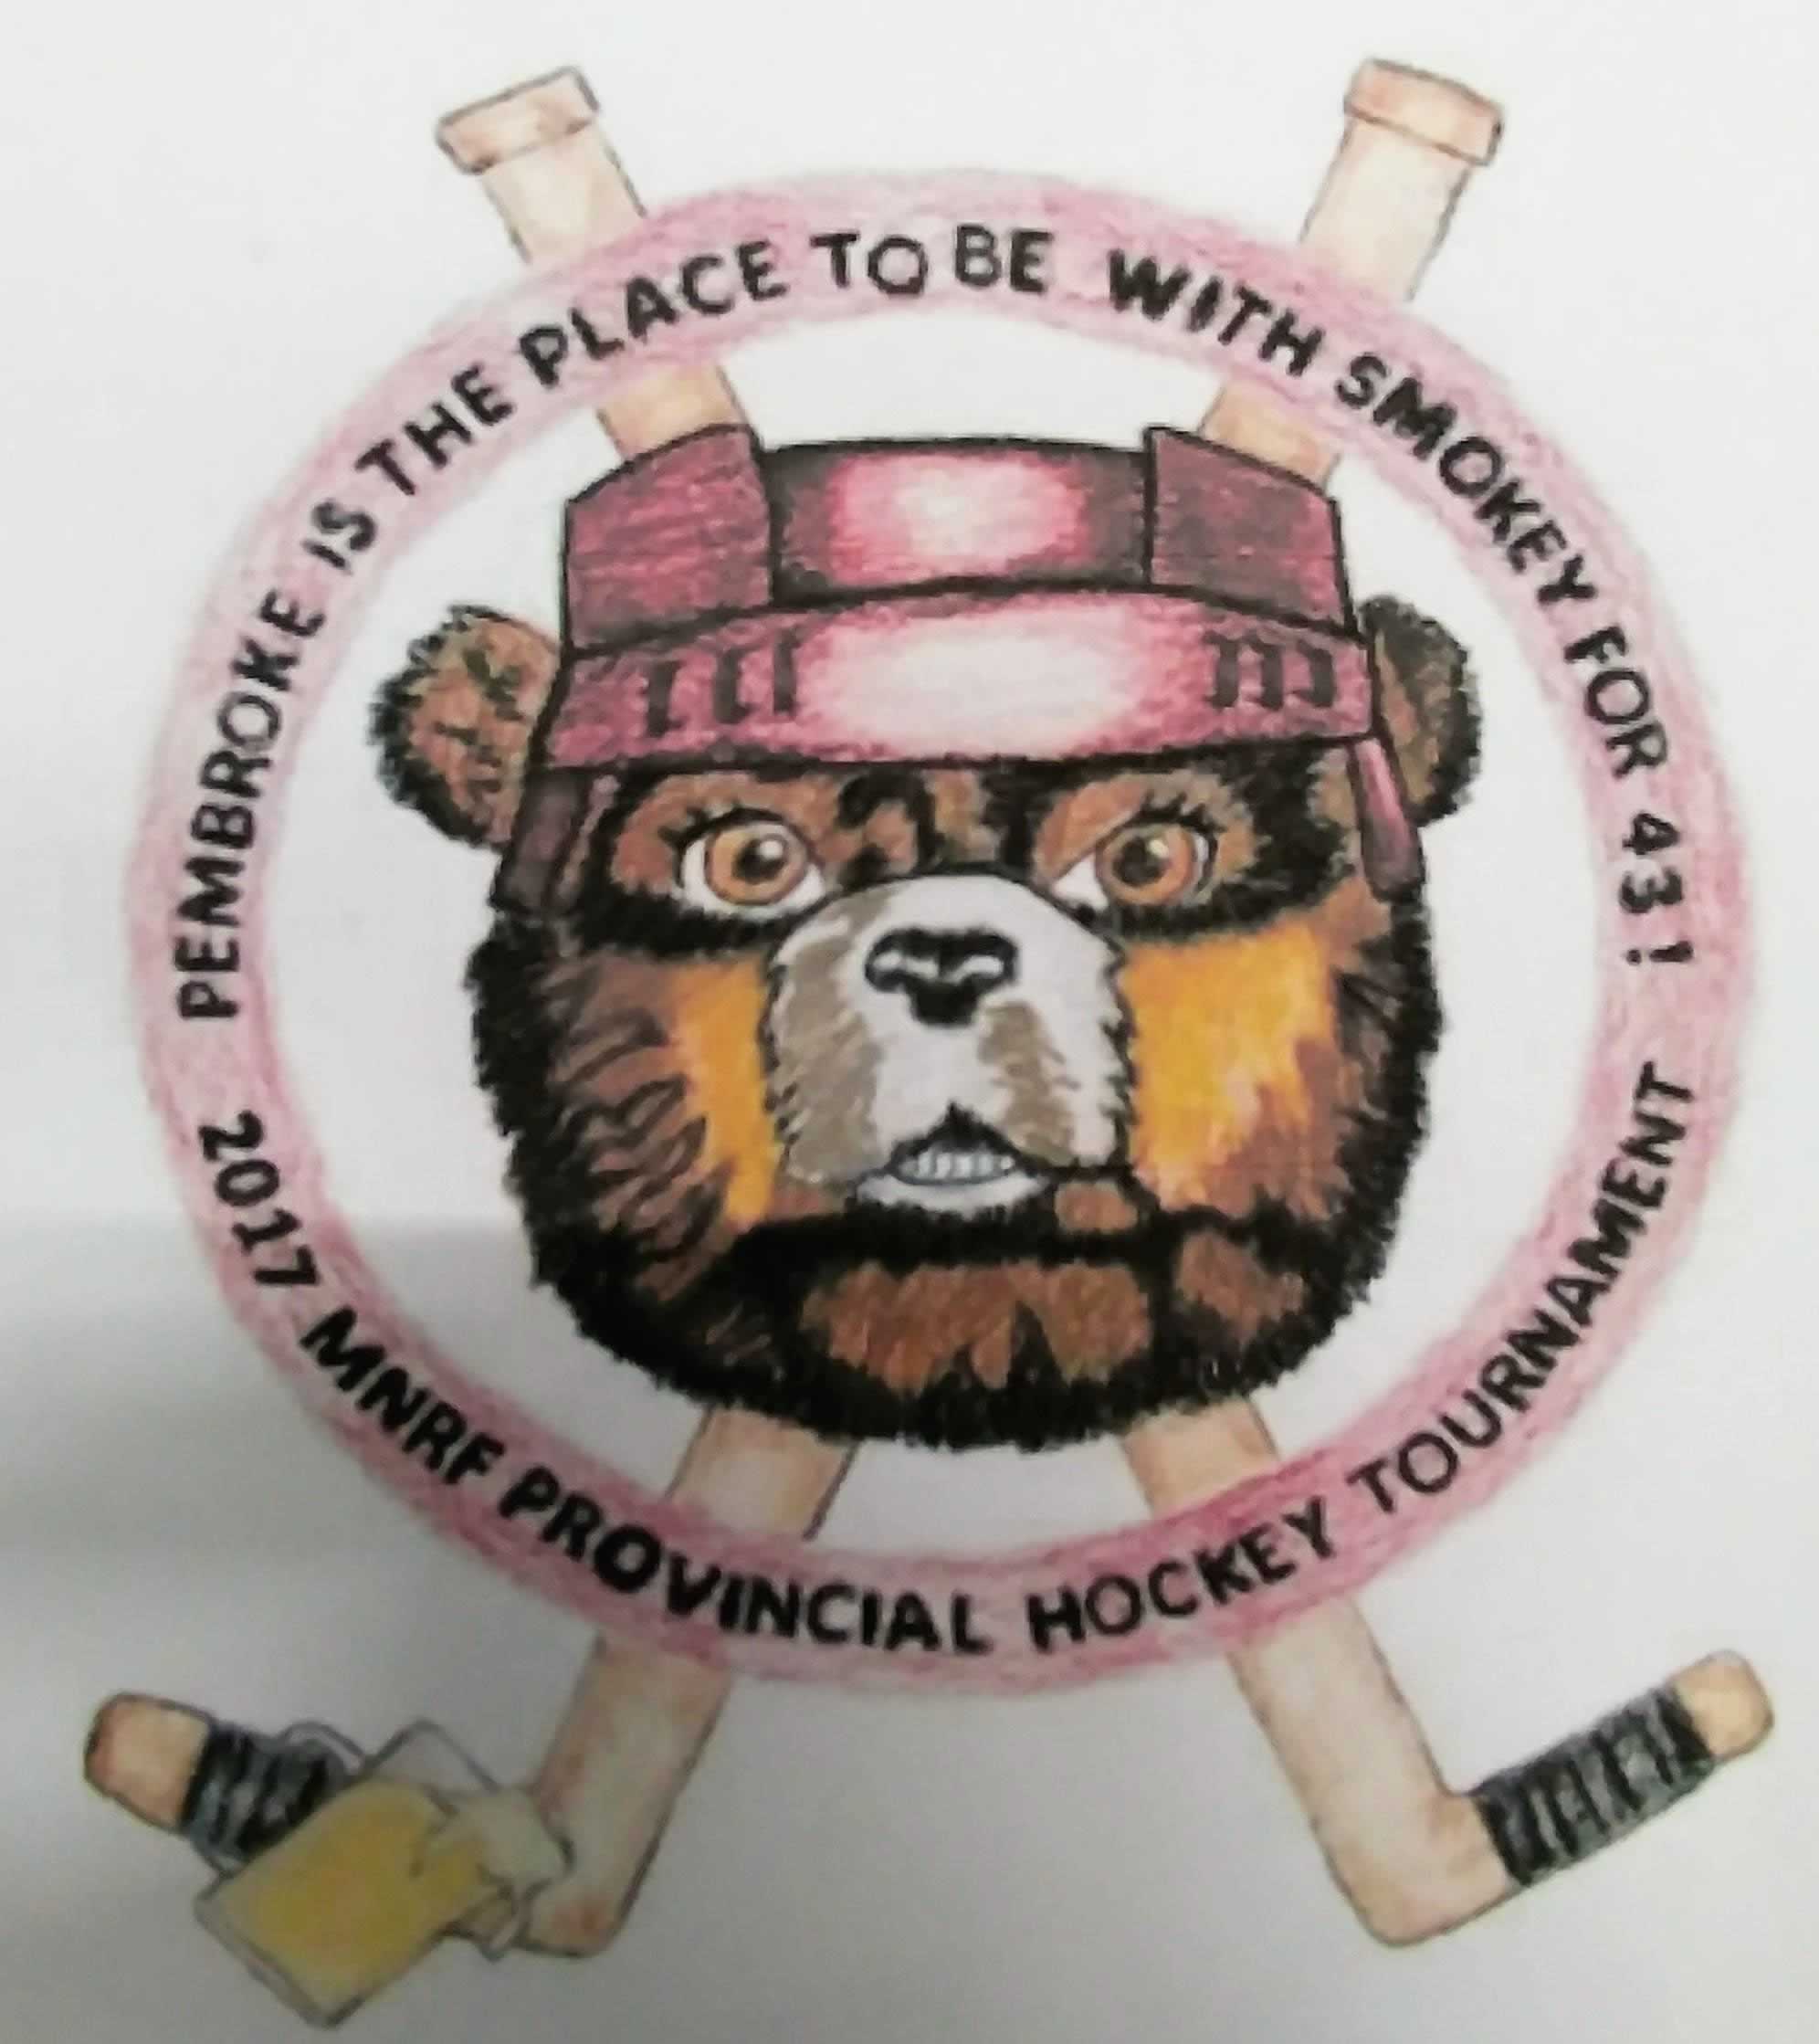 The MNRF Hockey Tournament logo